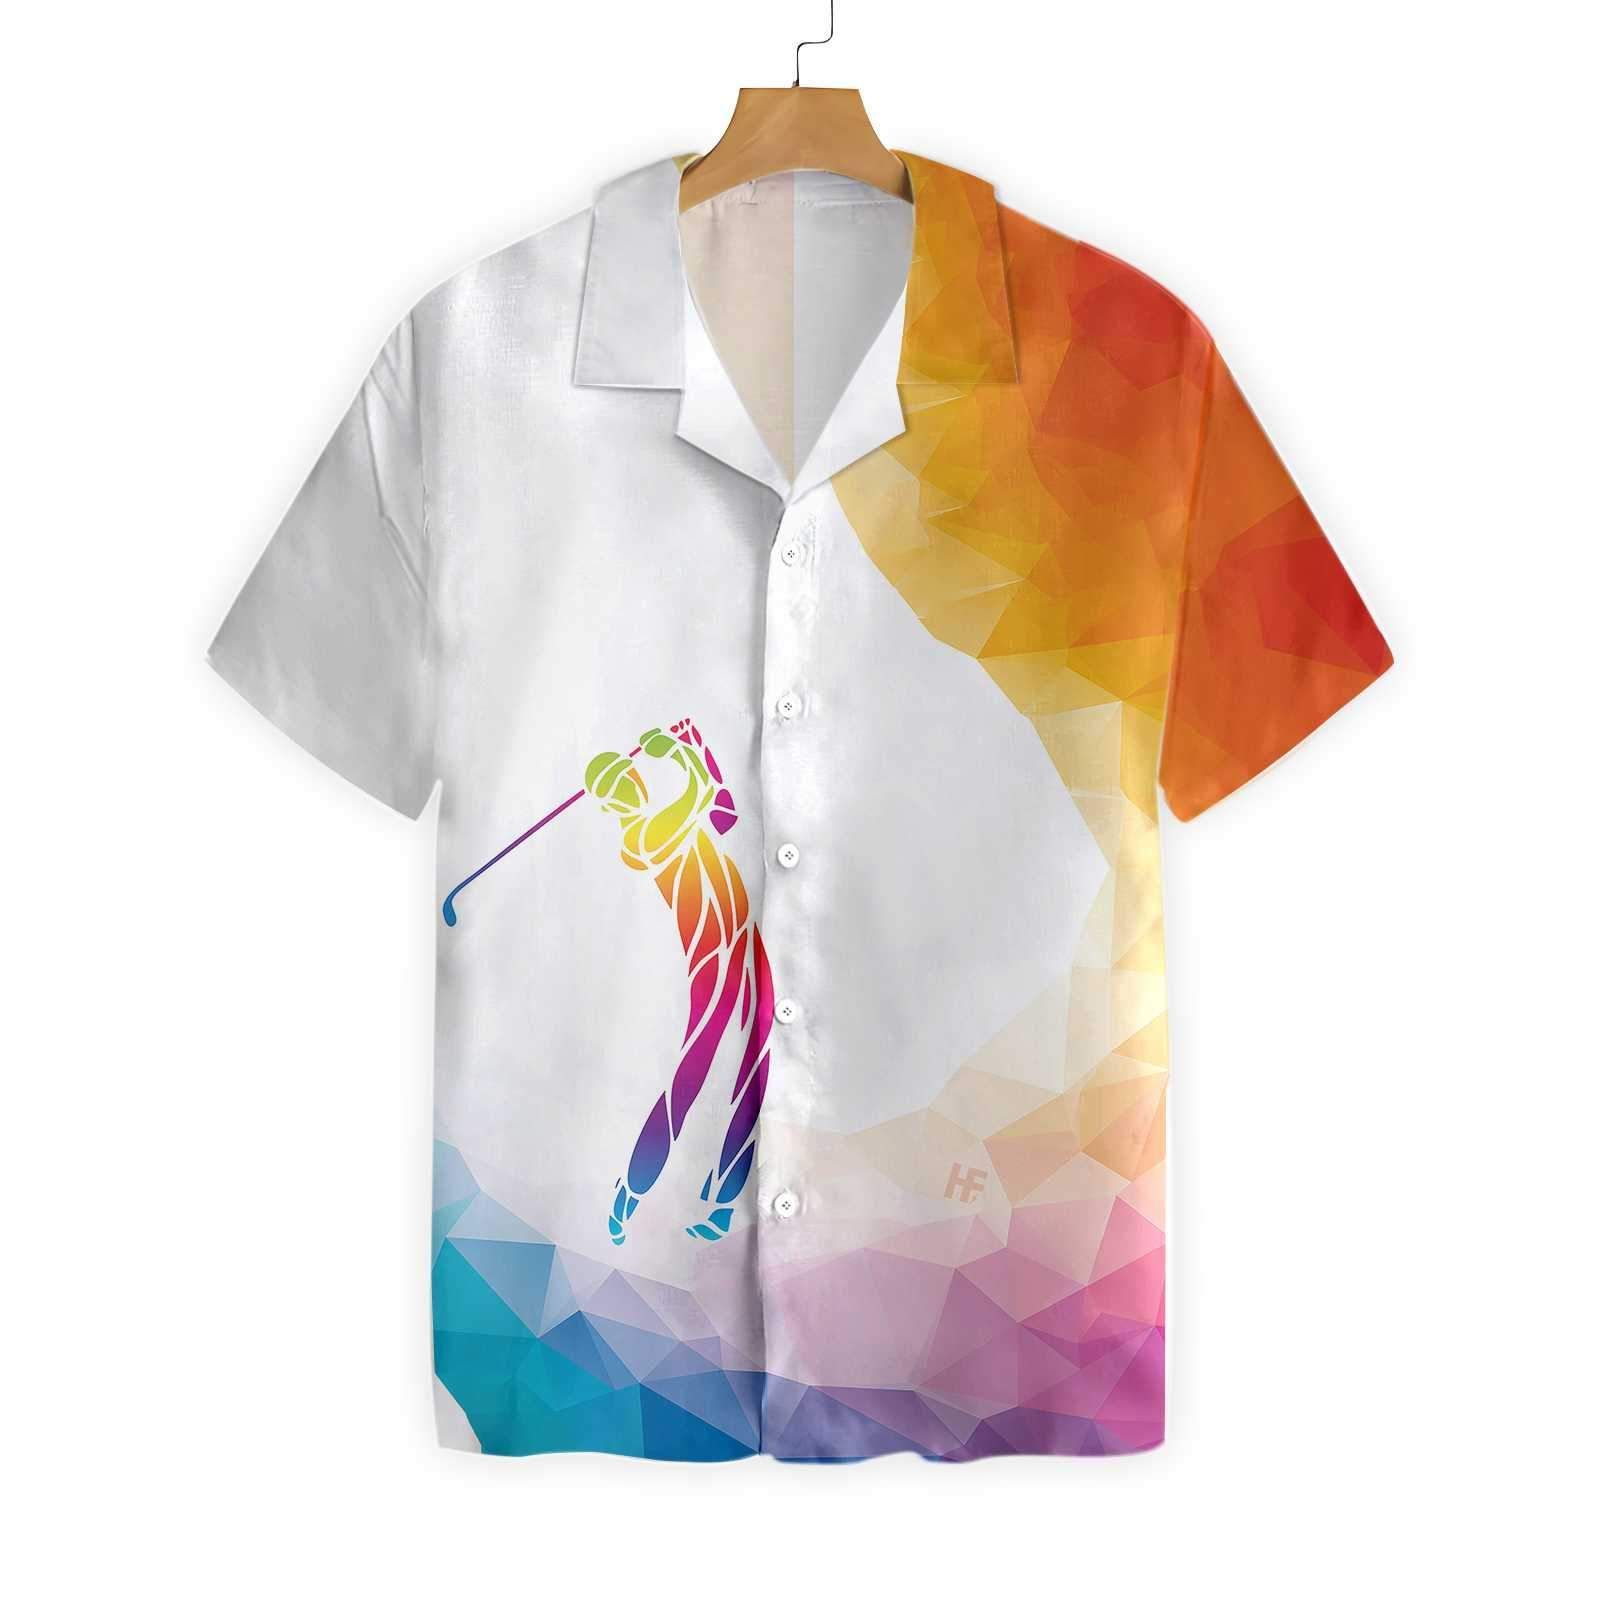 Creative Silhouette Of Golf Player Ez14 0401 Hawaiian Shirt